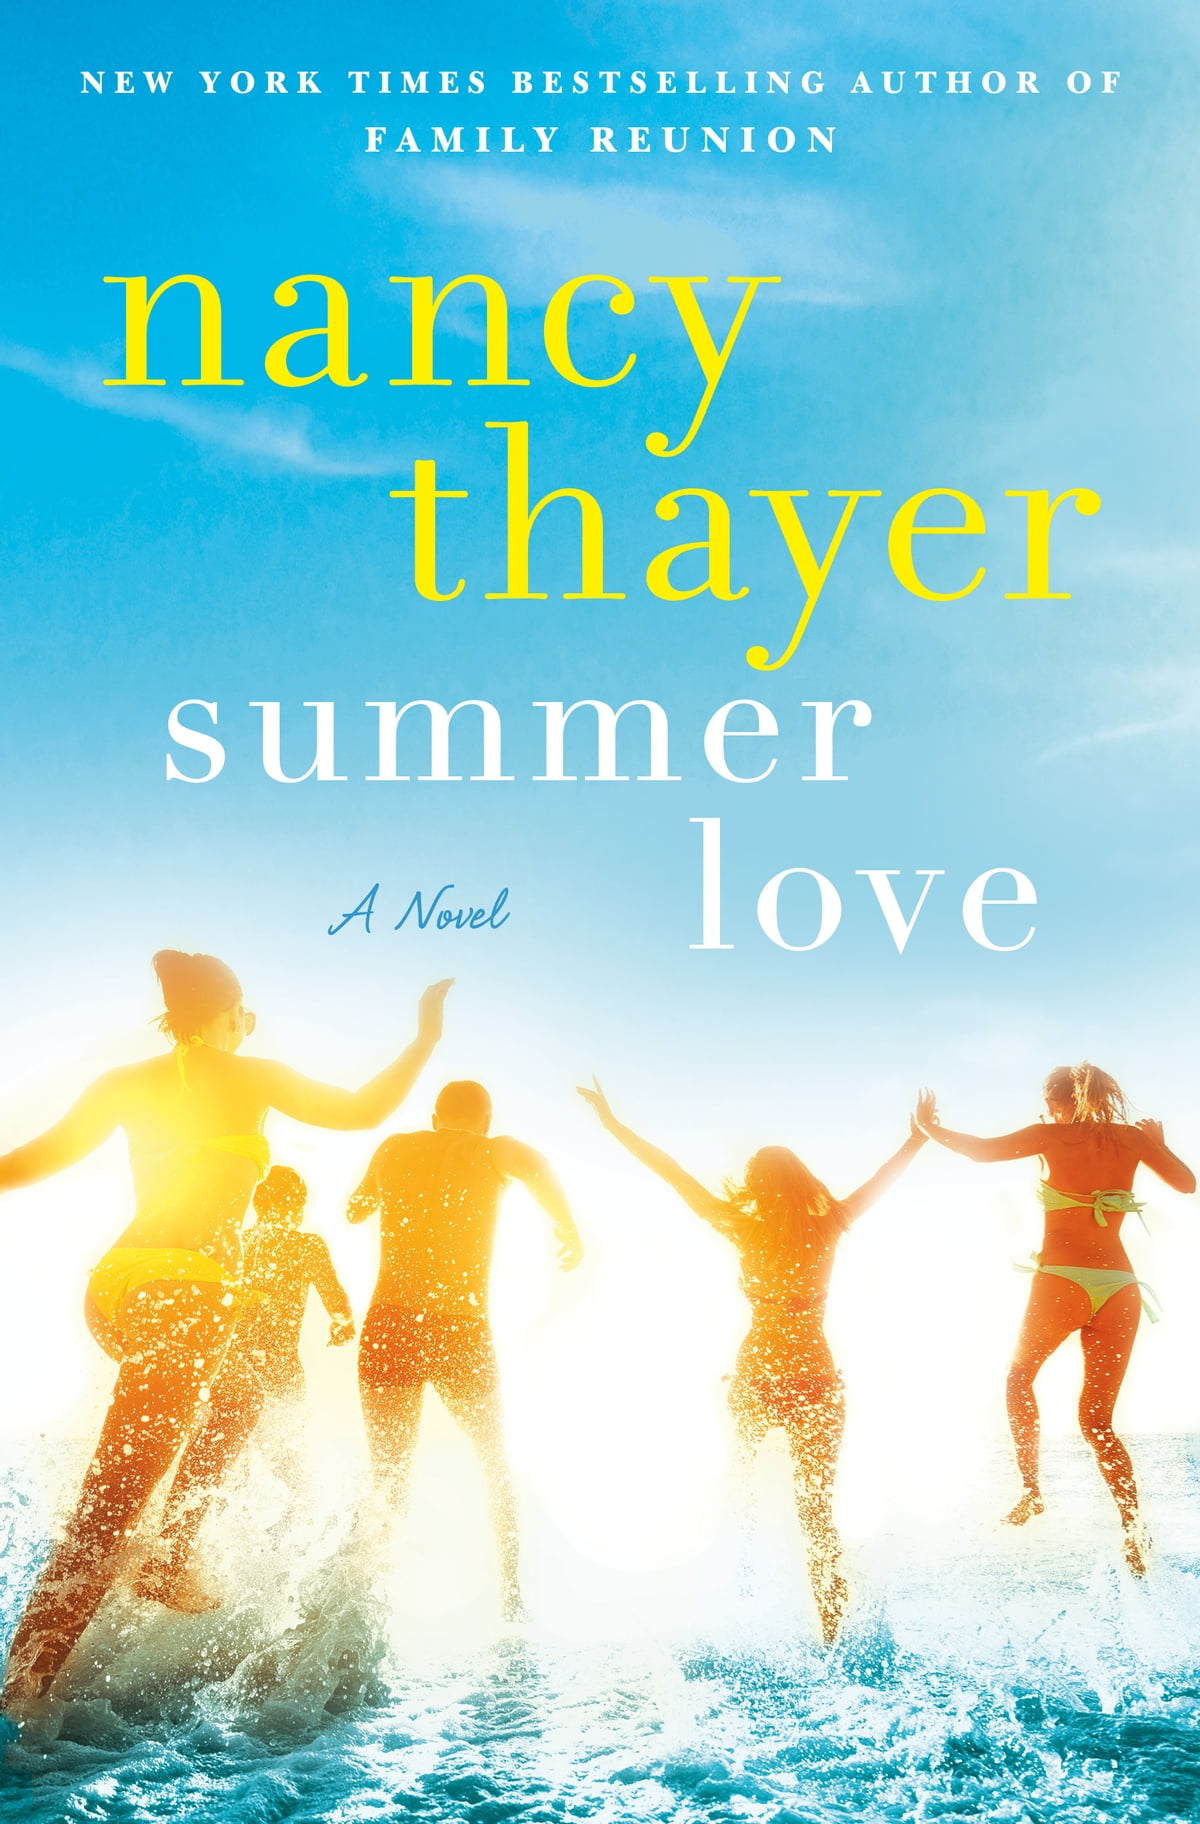 Summer Love by Nancy Thayer ePub Download